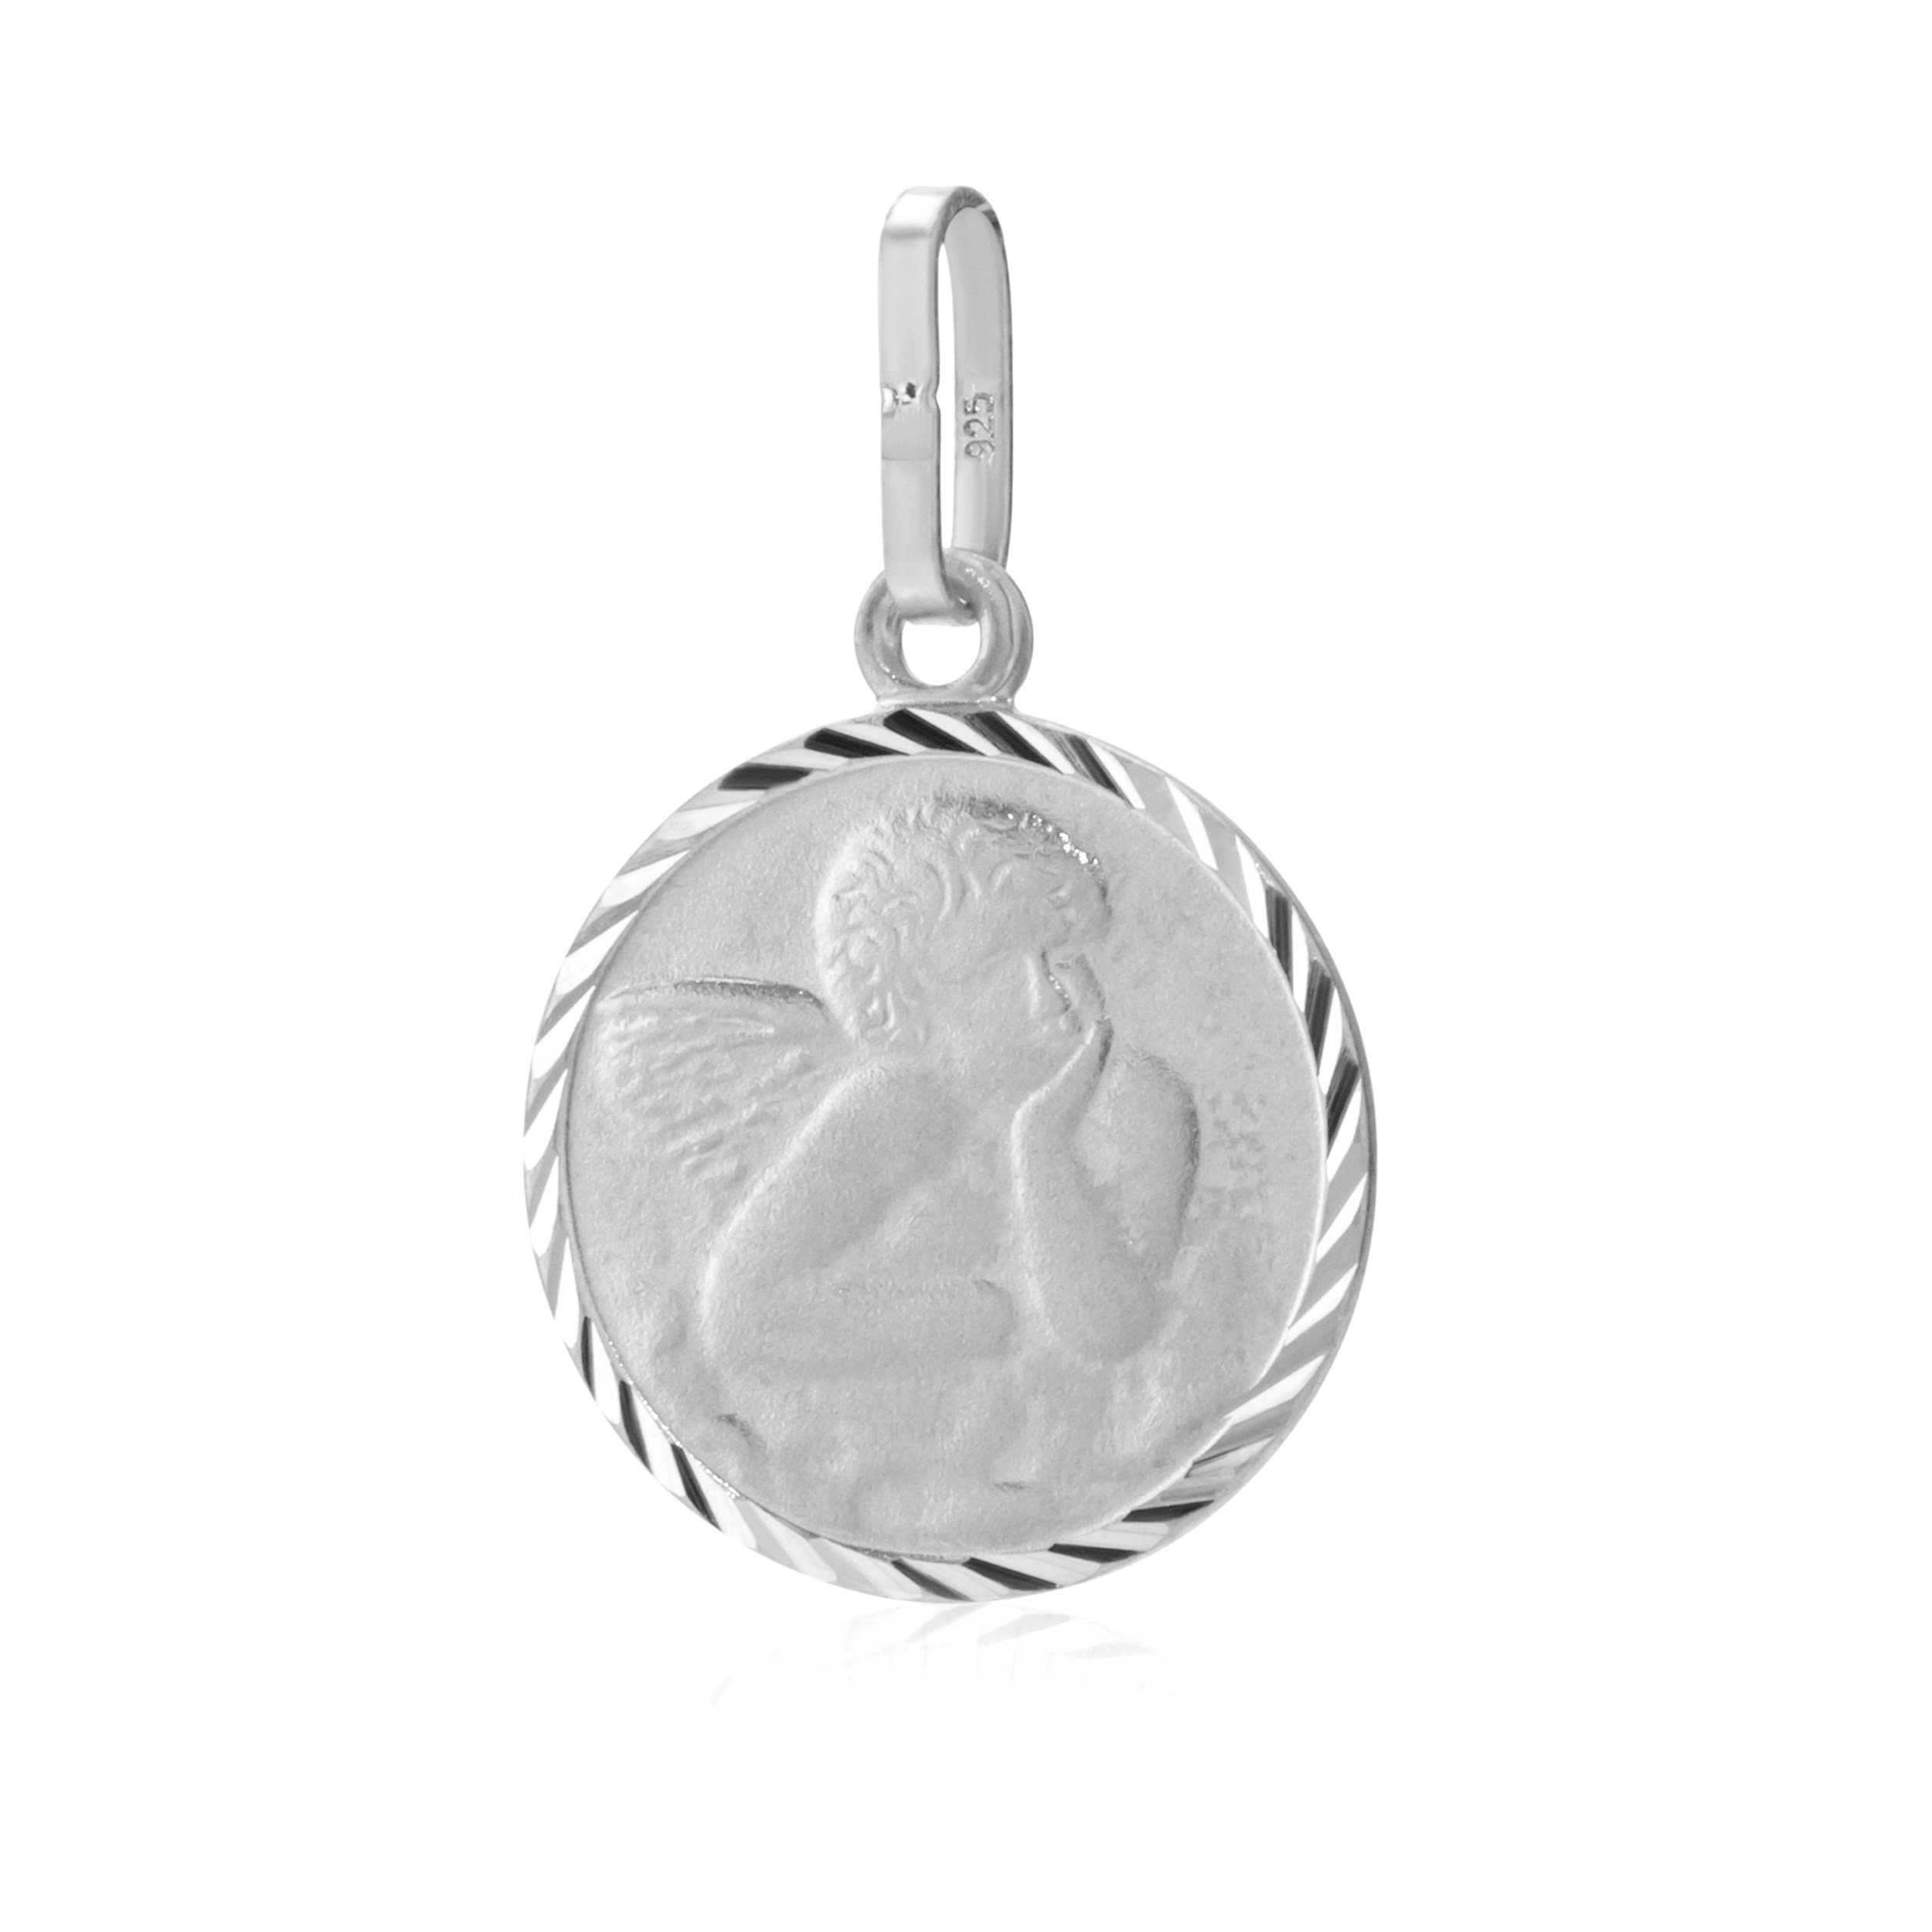 NKlaus Kettenanhänger Kettenanhänger Schutzengel 925 Silber diamantiert teilmatt 12mm Talism